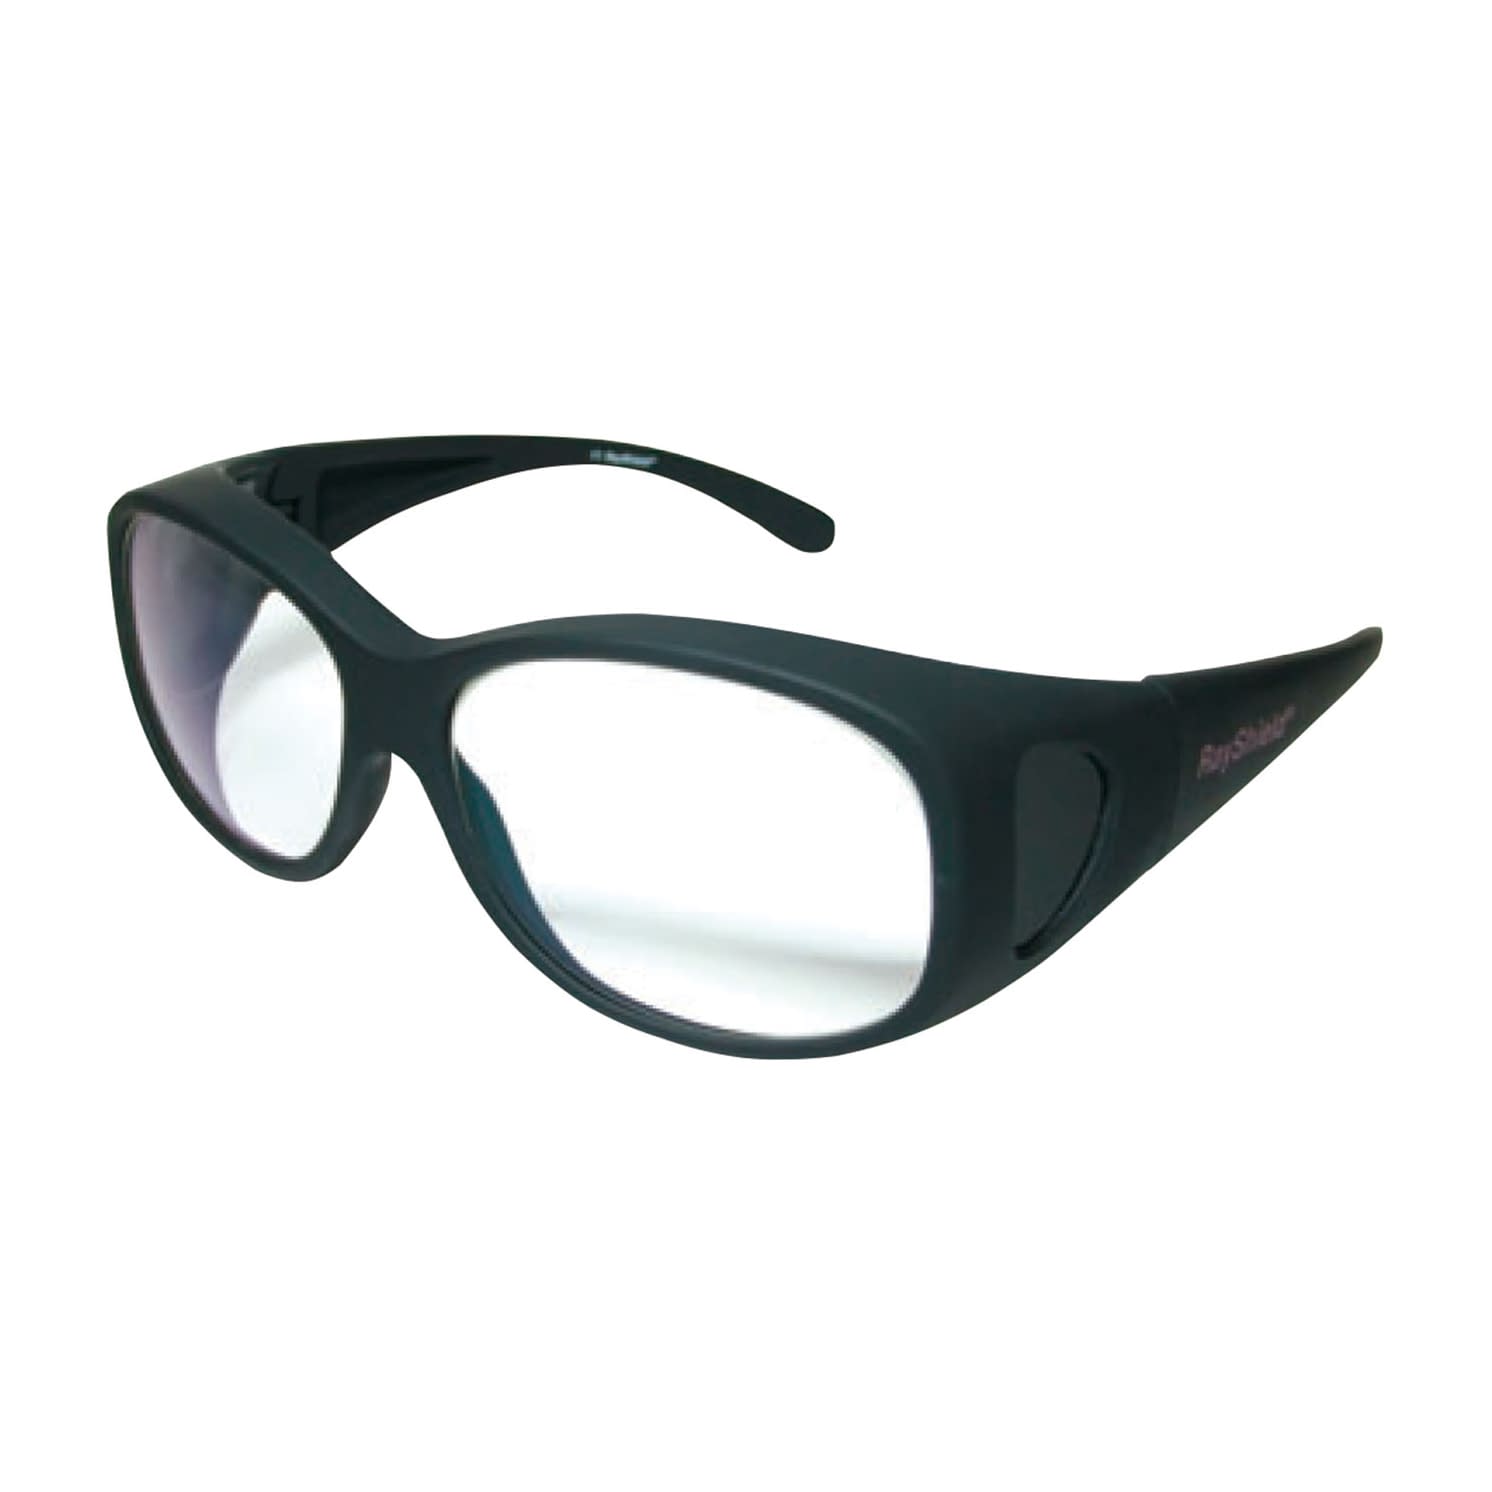 (24-4839-00)Ｘ線防護眼鏡フィットオーバー LG-N190(ﾌﾞﾗｯｸ) Xｾﾝﾎﾞｳｺﾞﾒｶﾞﾈﾌｨｯﾄｵｰﾊﾞ【1個単位】【2019年カタログ商品】